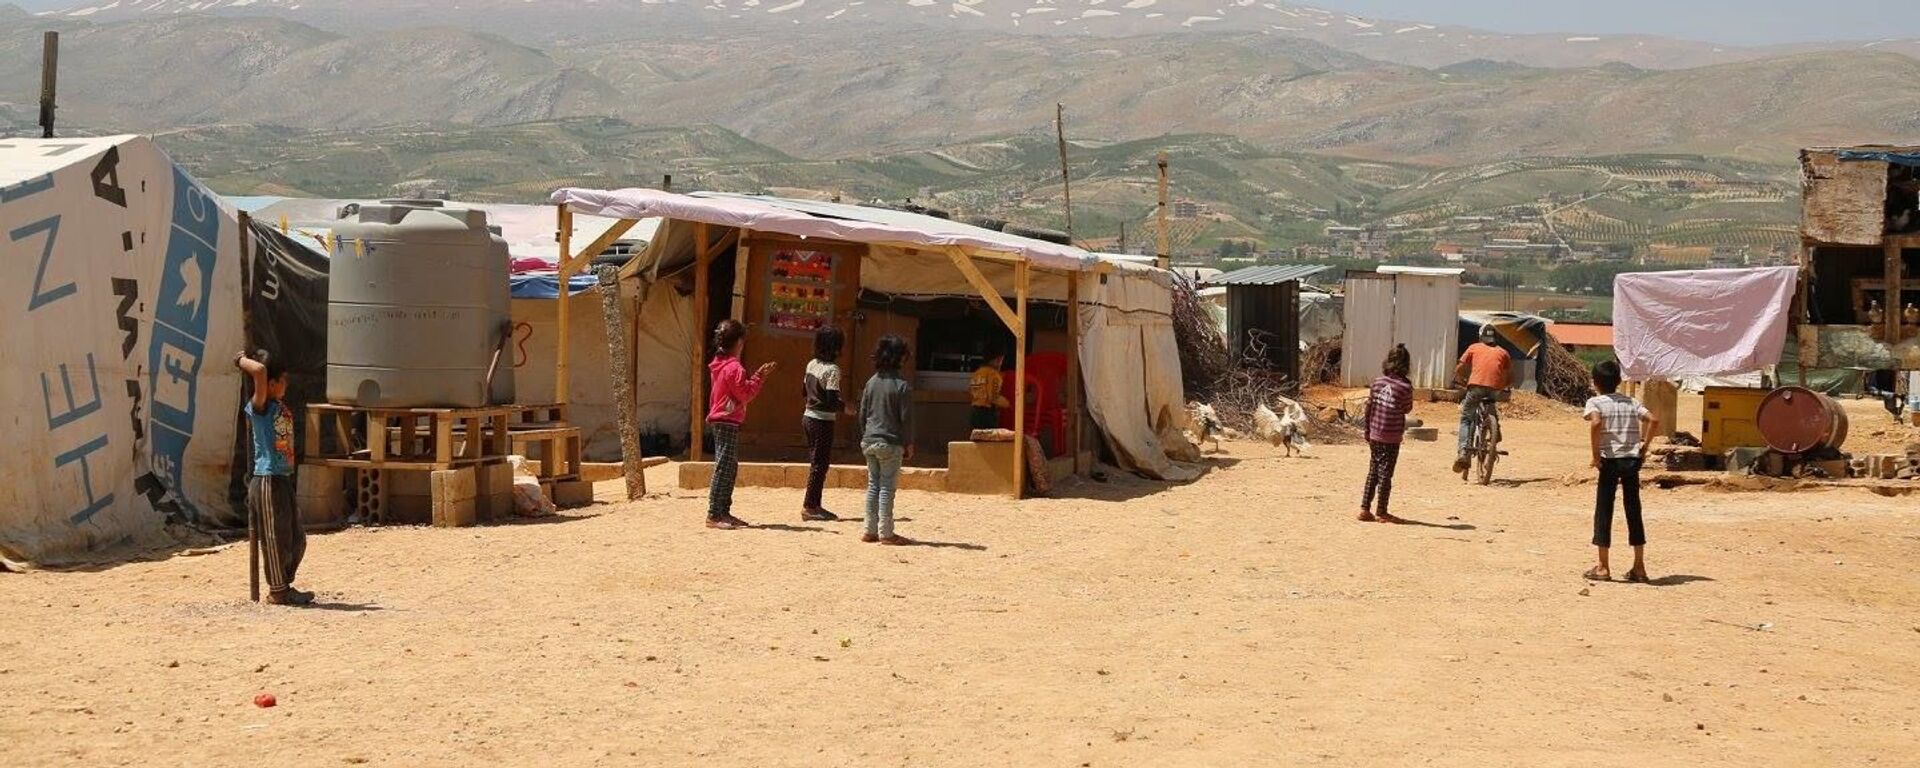 مخيم لاجئين في لبنان - سبوتنيك عربي, 1920, 02.04.2023